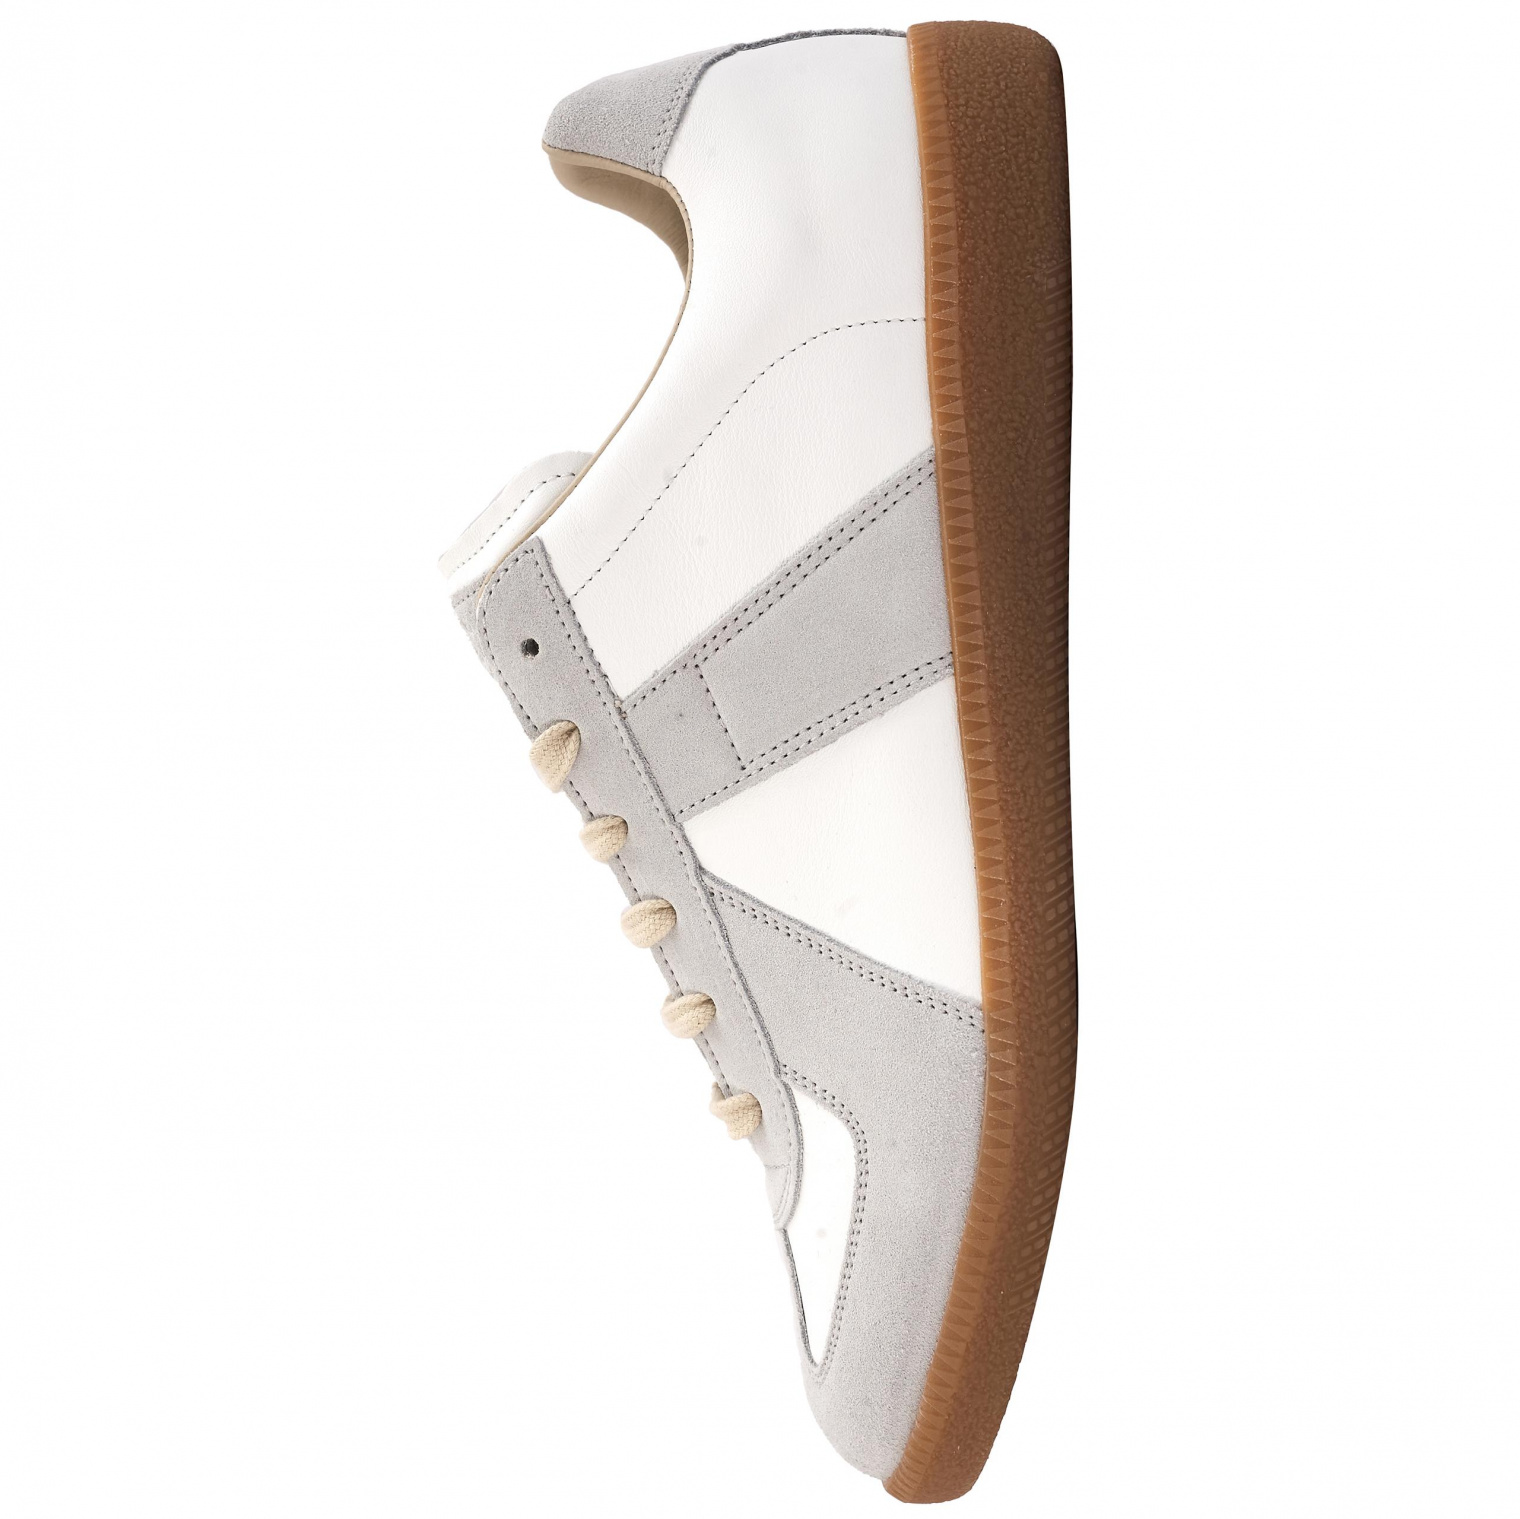 Maison Margiela Leather Replica Sneakers in White